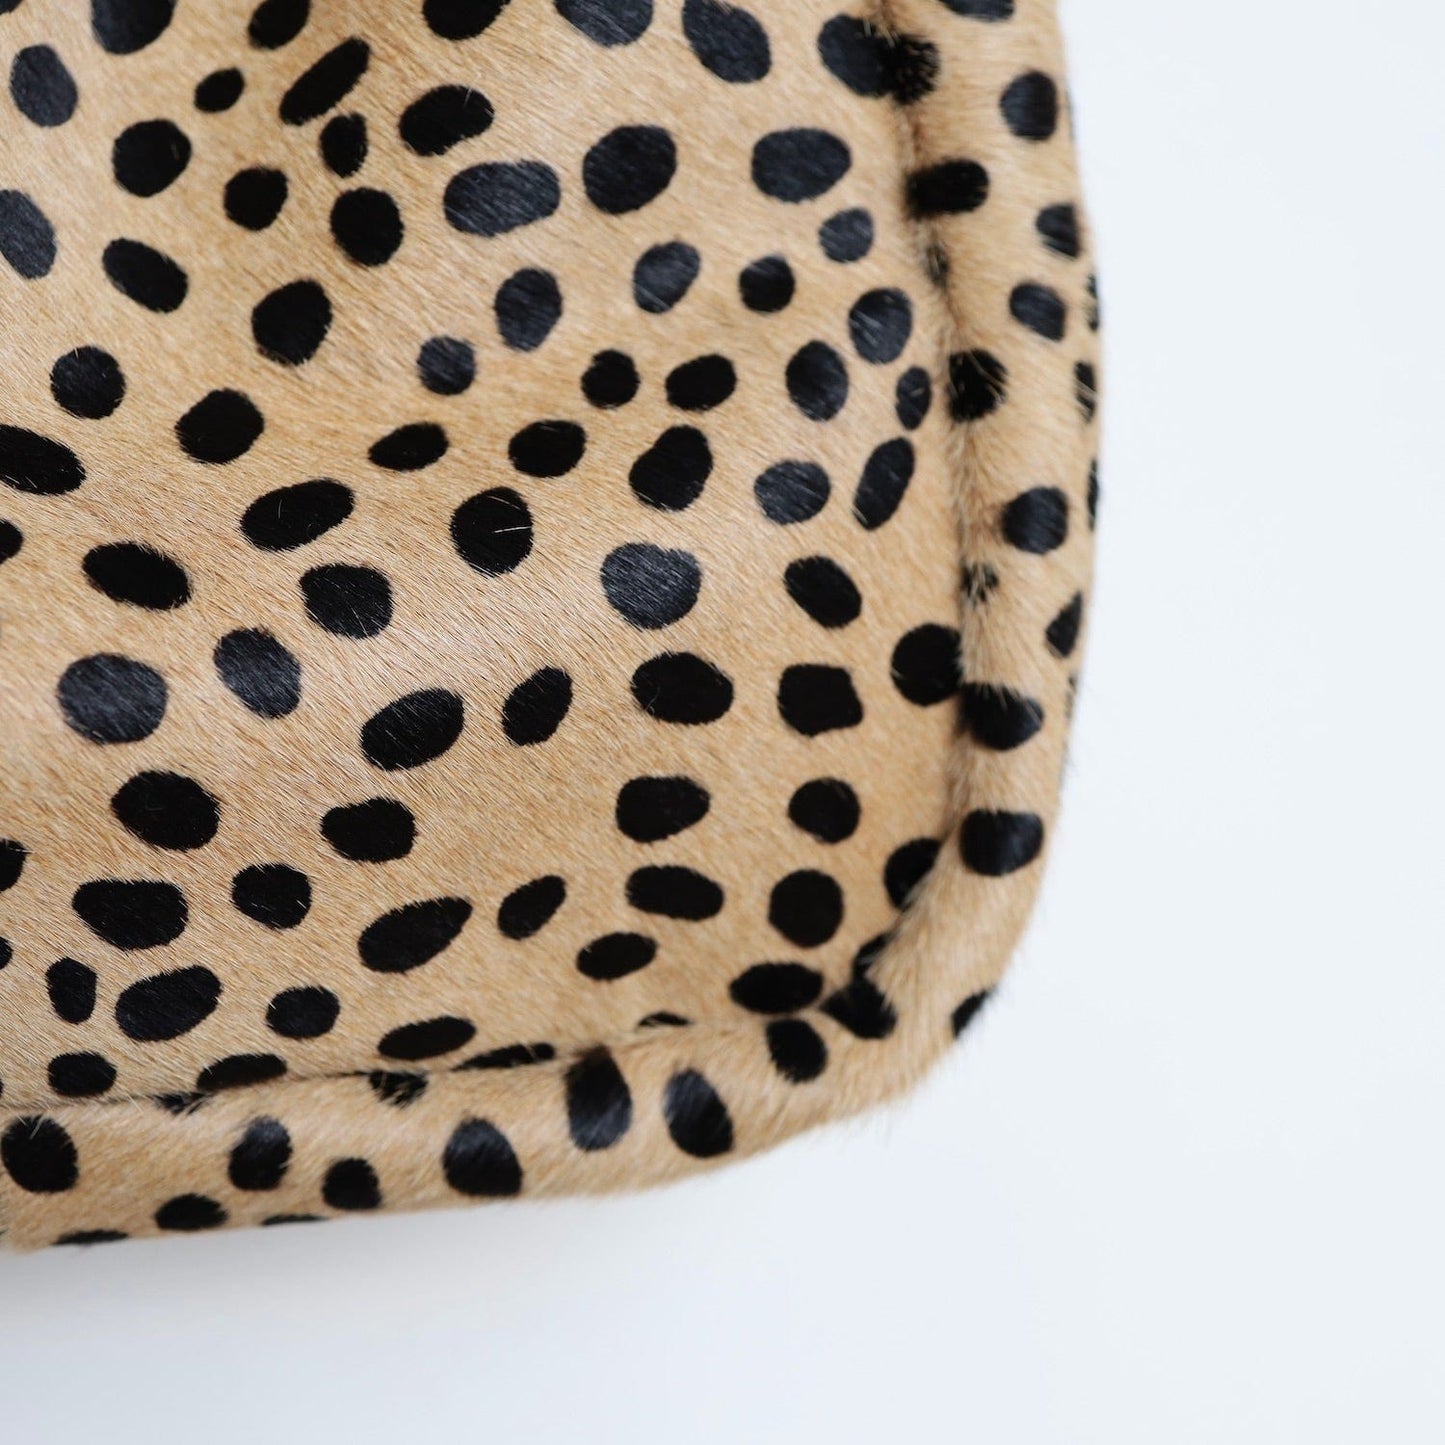 BAG The Lisette Hobo in Cheetah with Black Strap